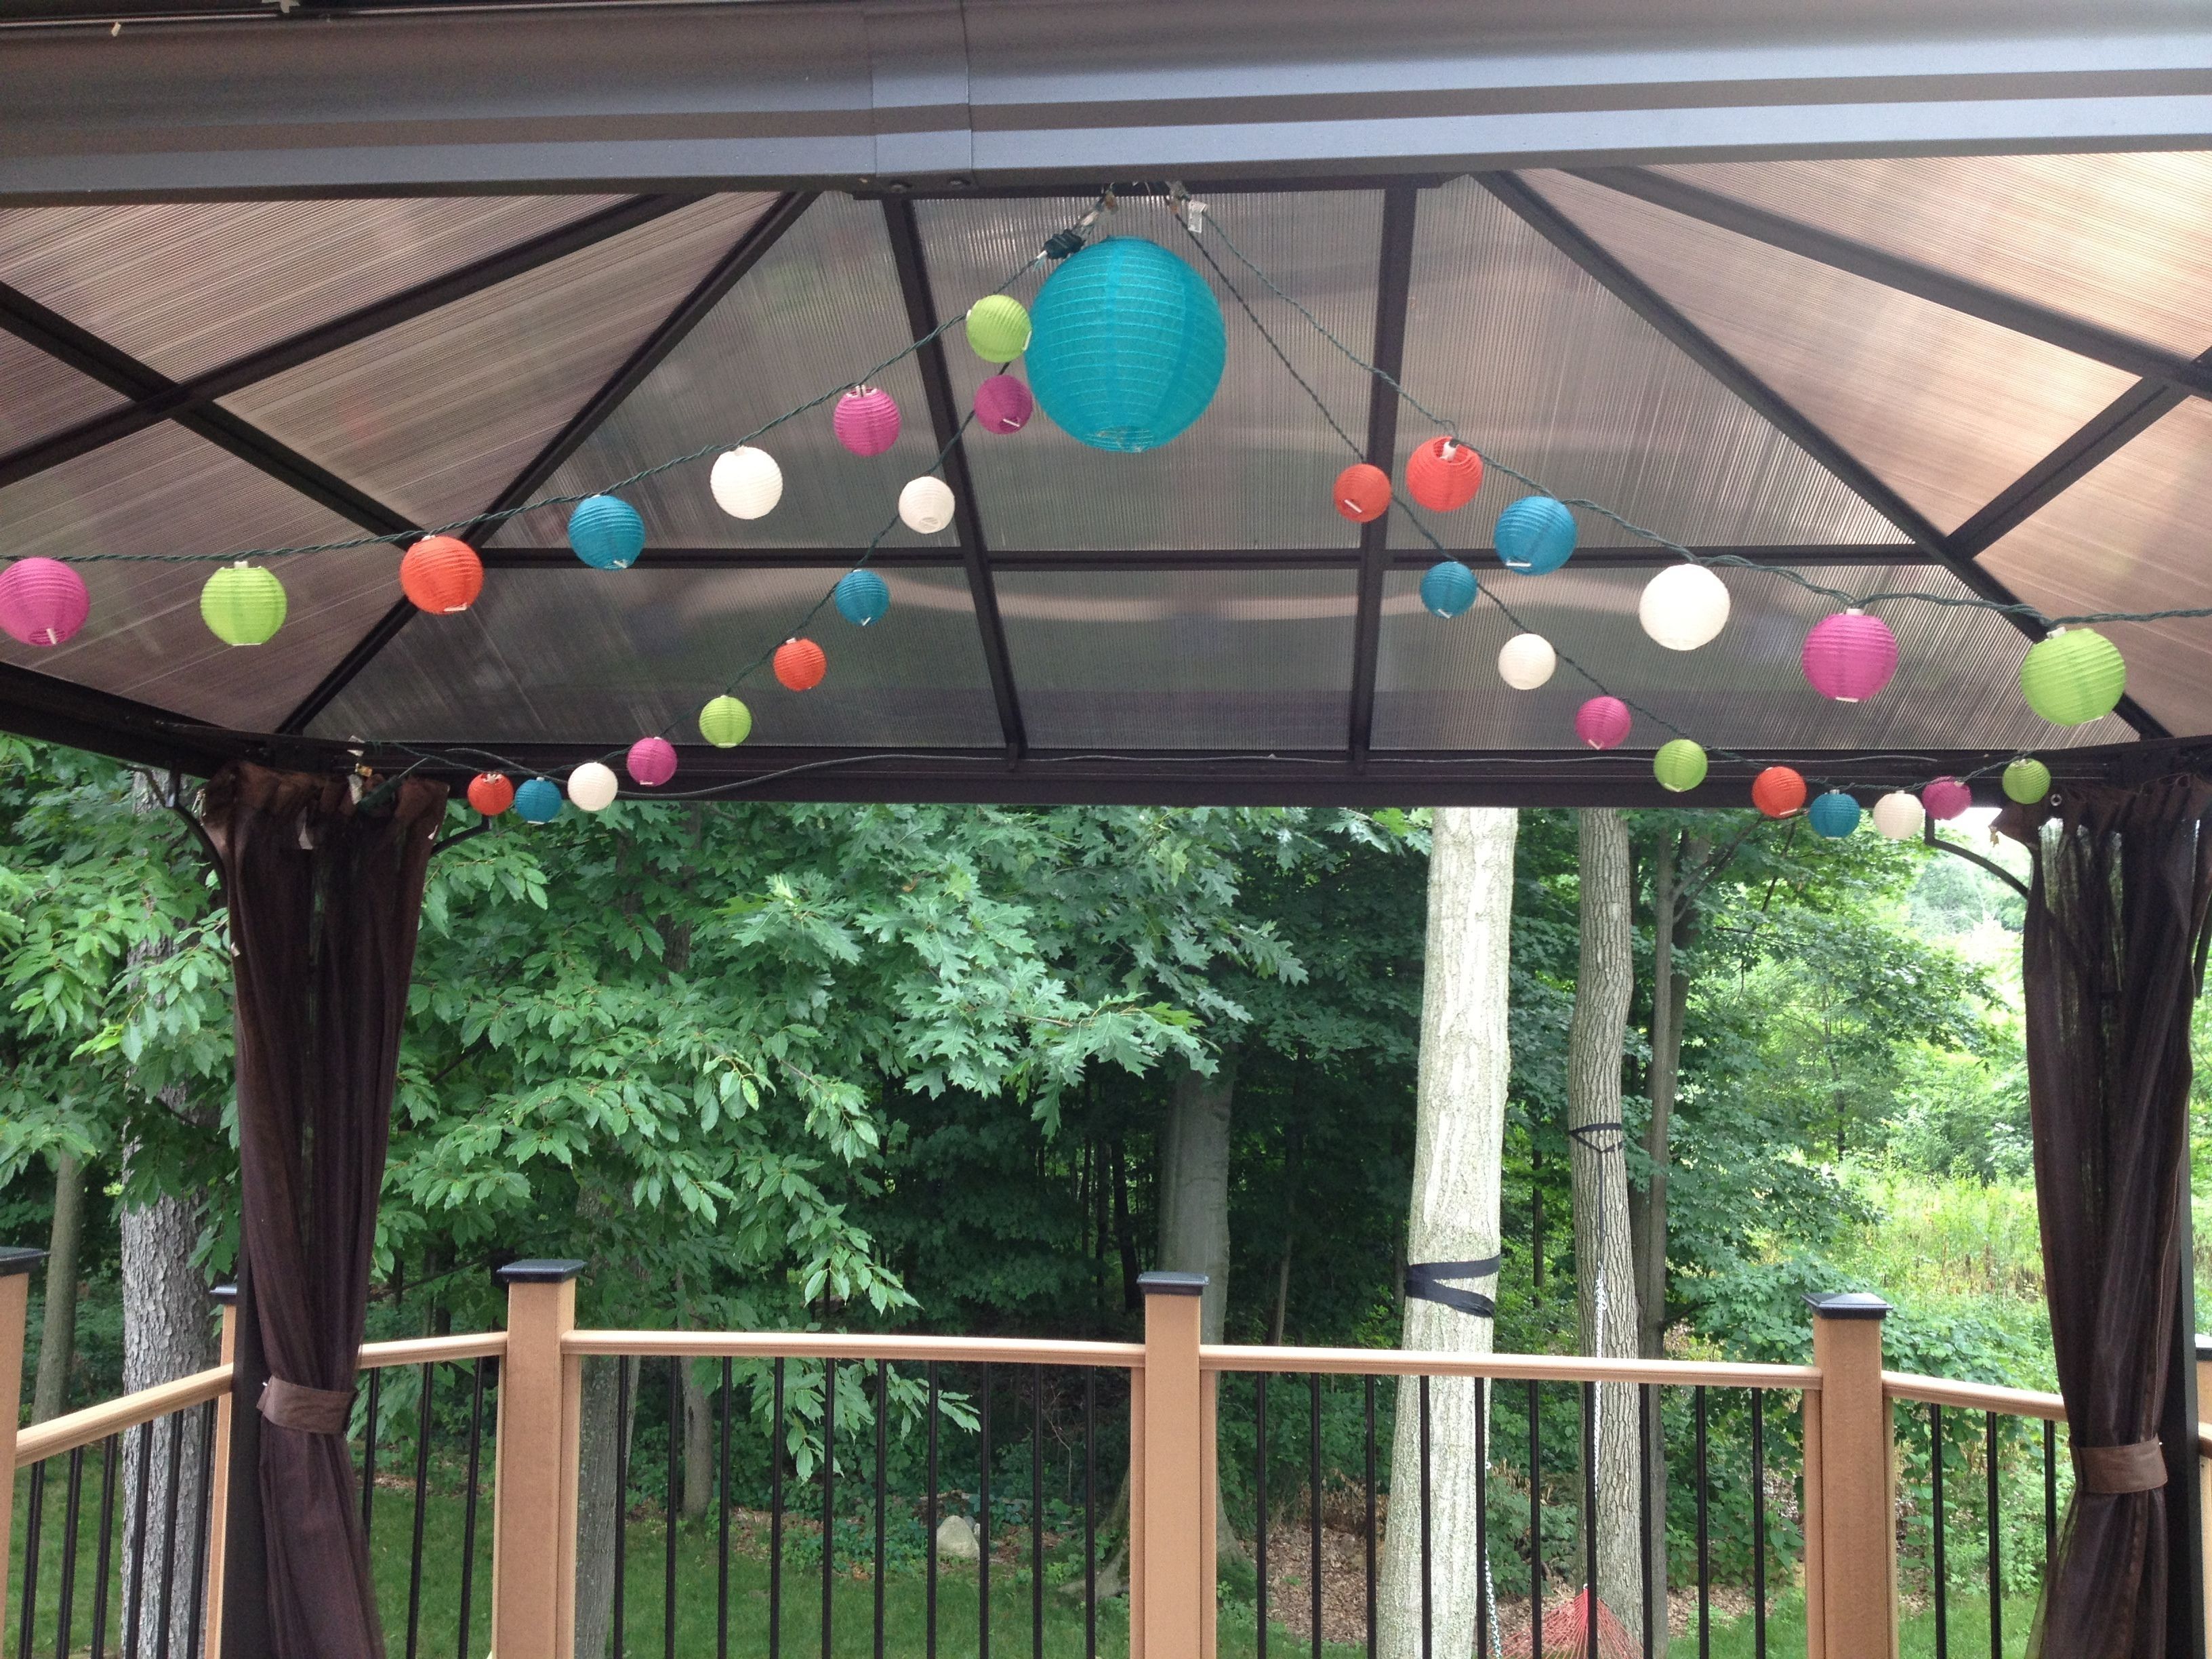 Our Deck's Gazebo With Paper Lantern String Lights | Deck Ideas Within Outdoor Gazebo Lanterns (Photo 1 of 20)